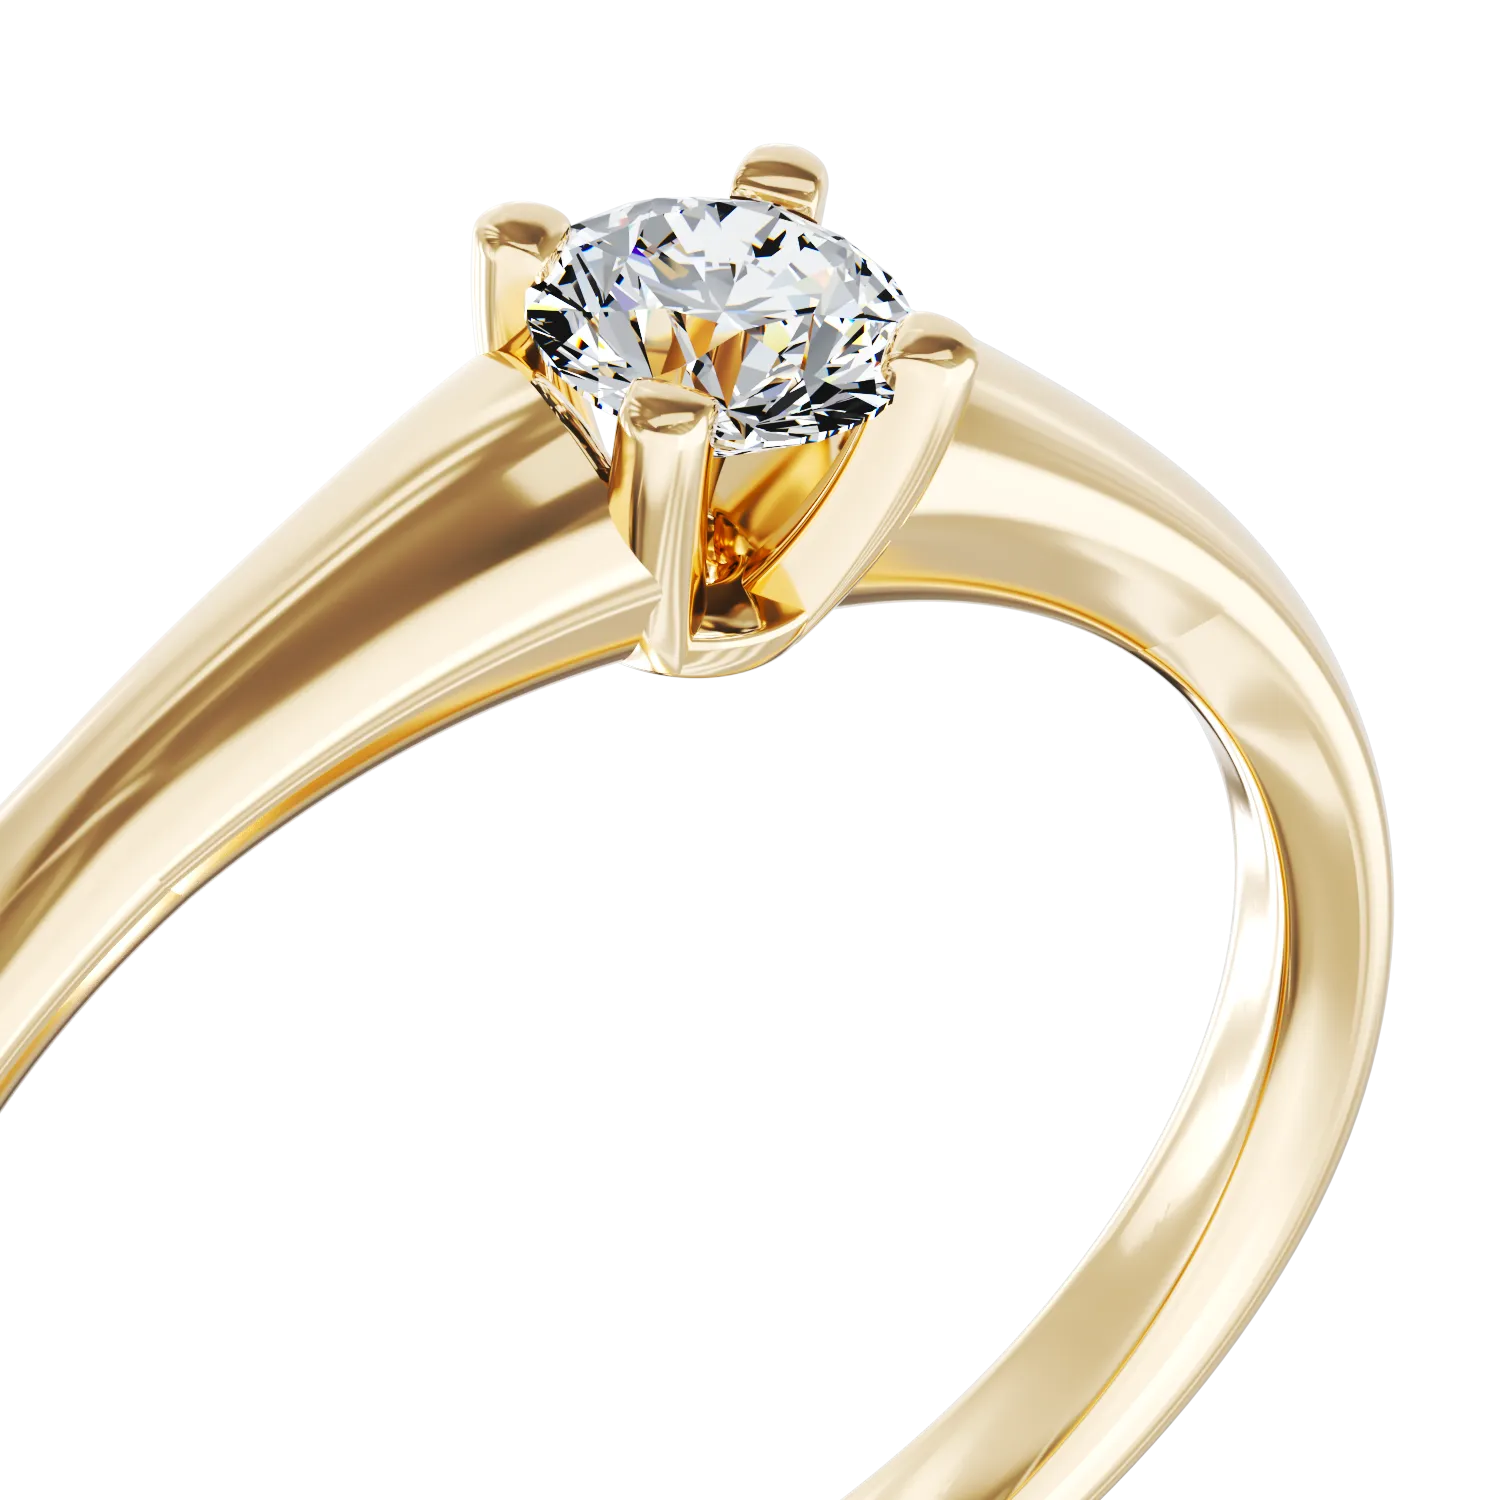 Inel de logodna din aur galben de 18K cu un diamant solitaire de 0.195ct